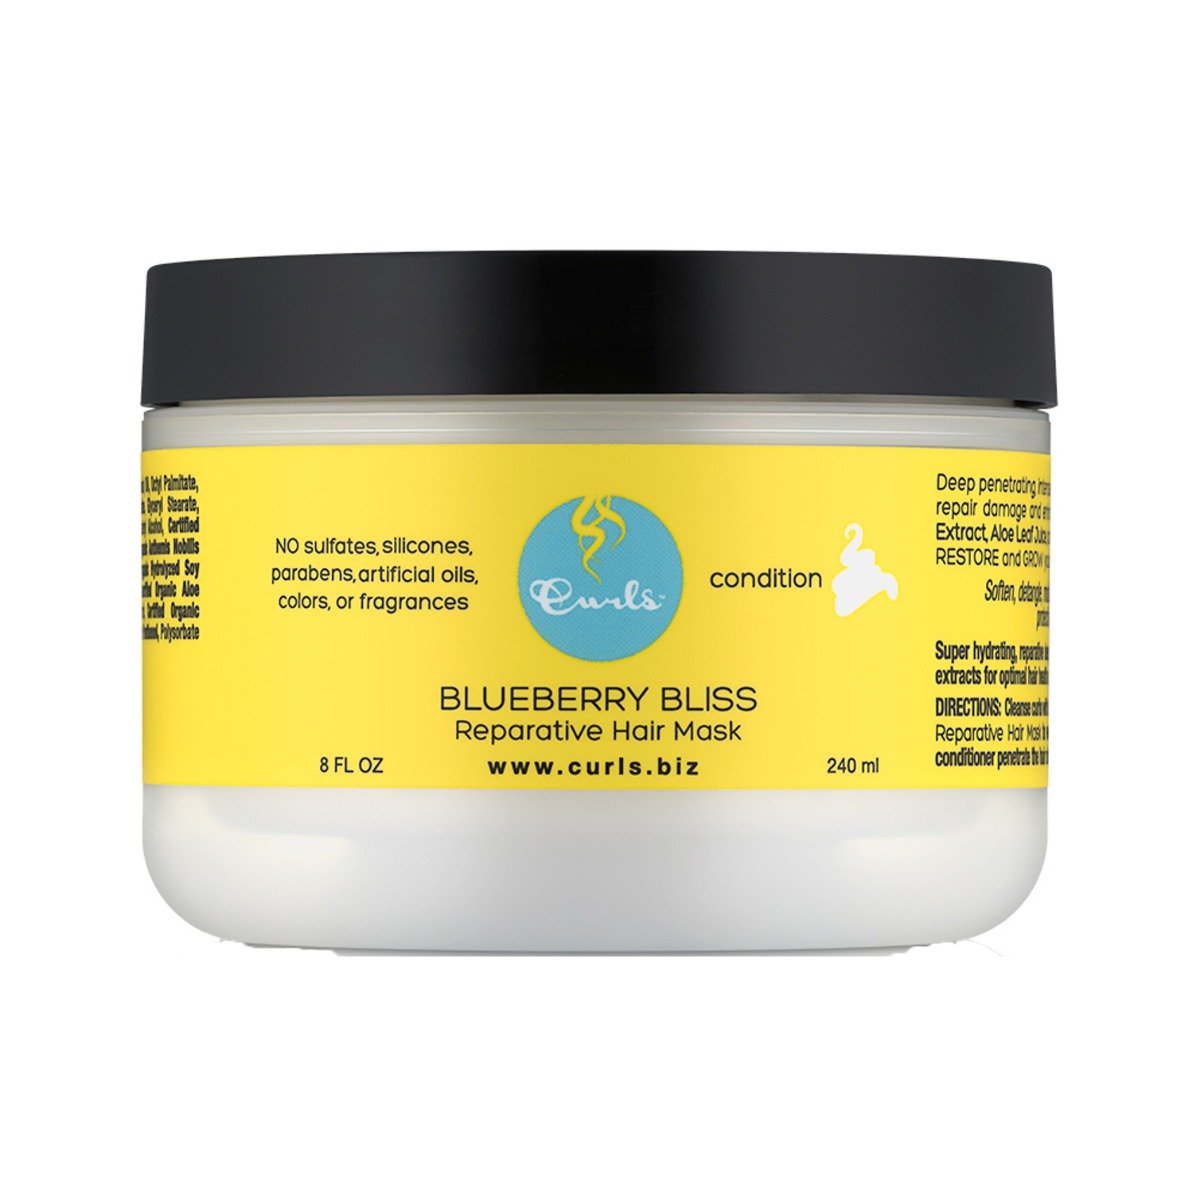 Curls Blueberry Bliss Reparative Hair Mask – 240ml - Bloom Pharmacy